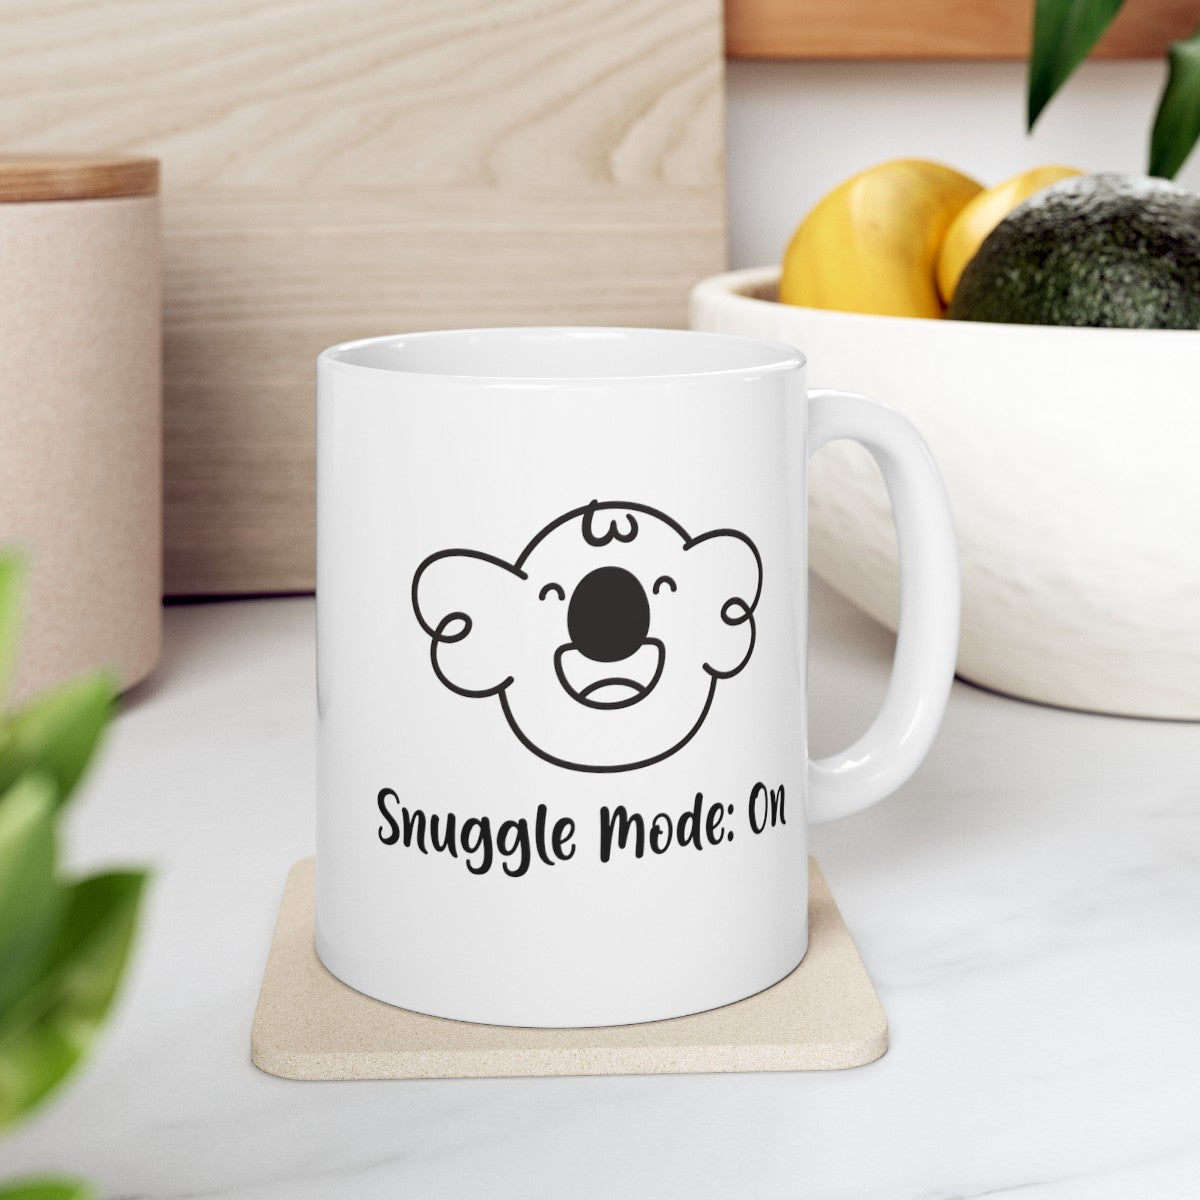 Cabbage's Snuggle Mode: On Mug